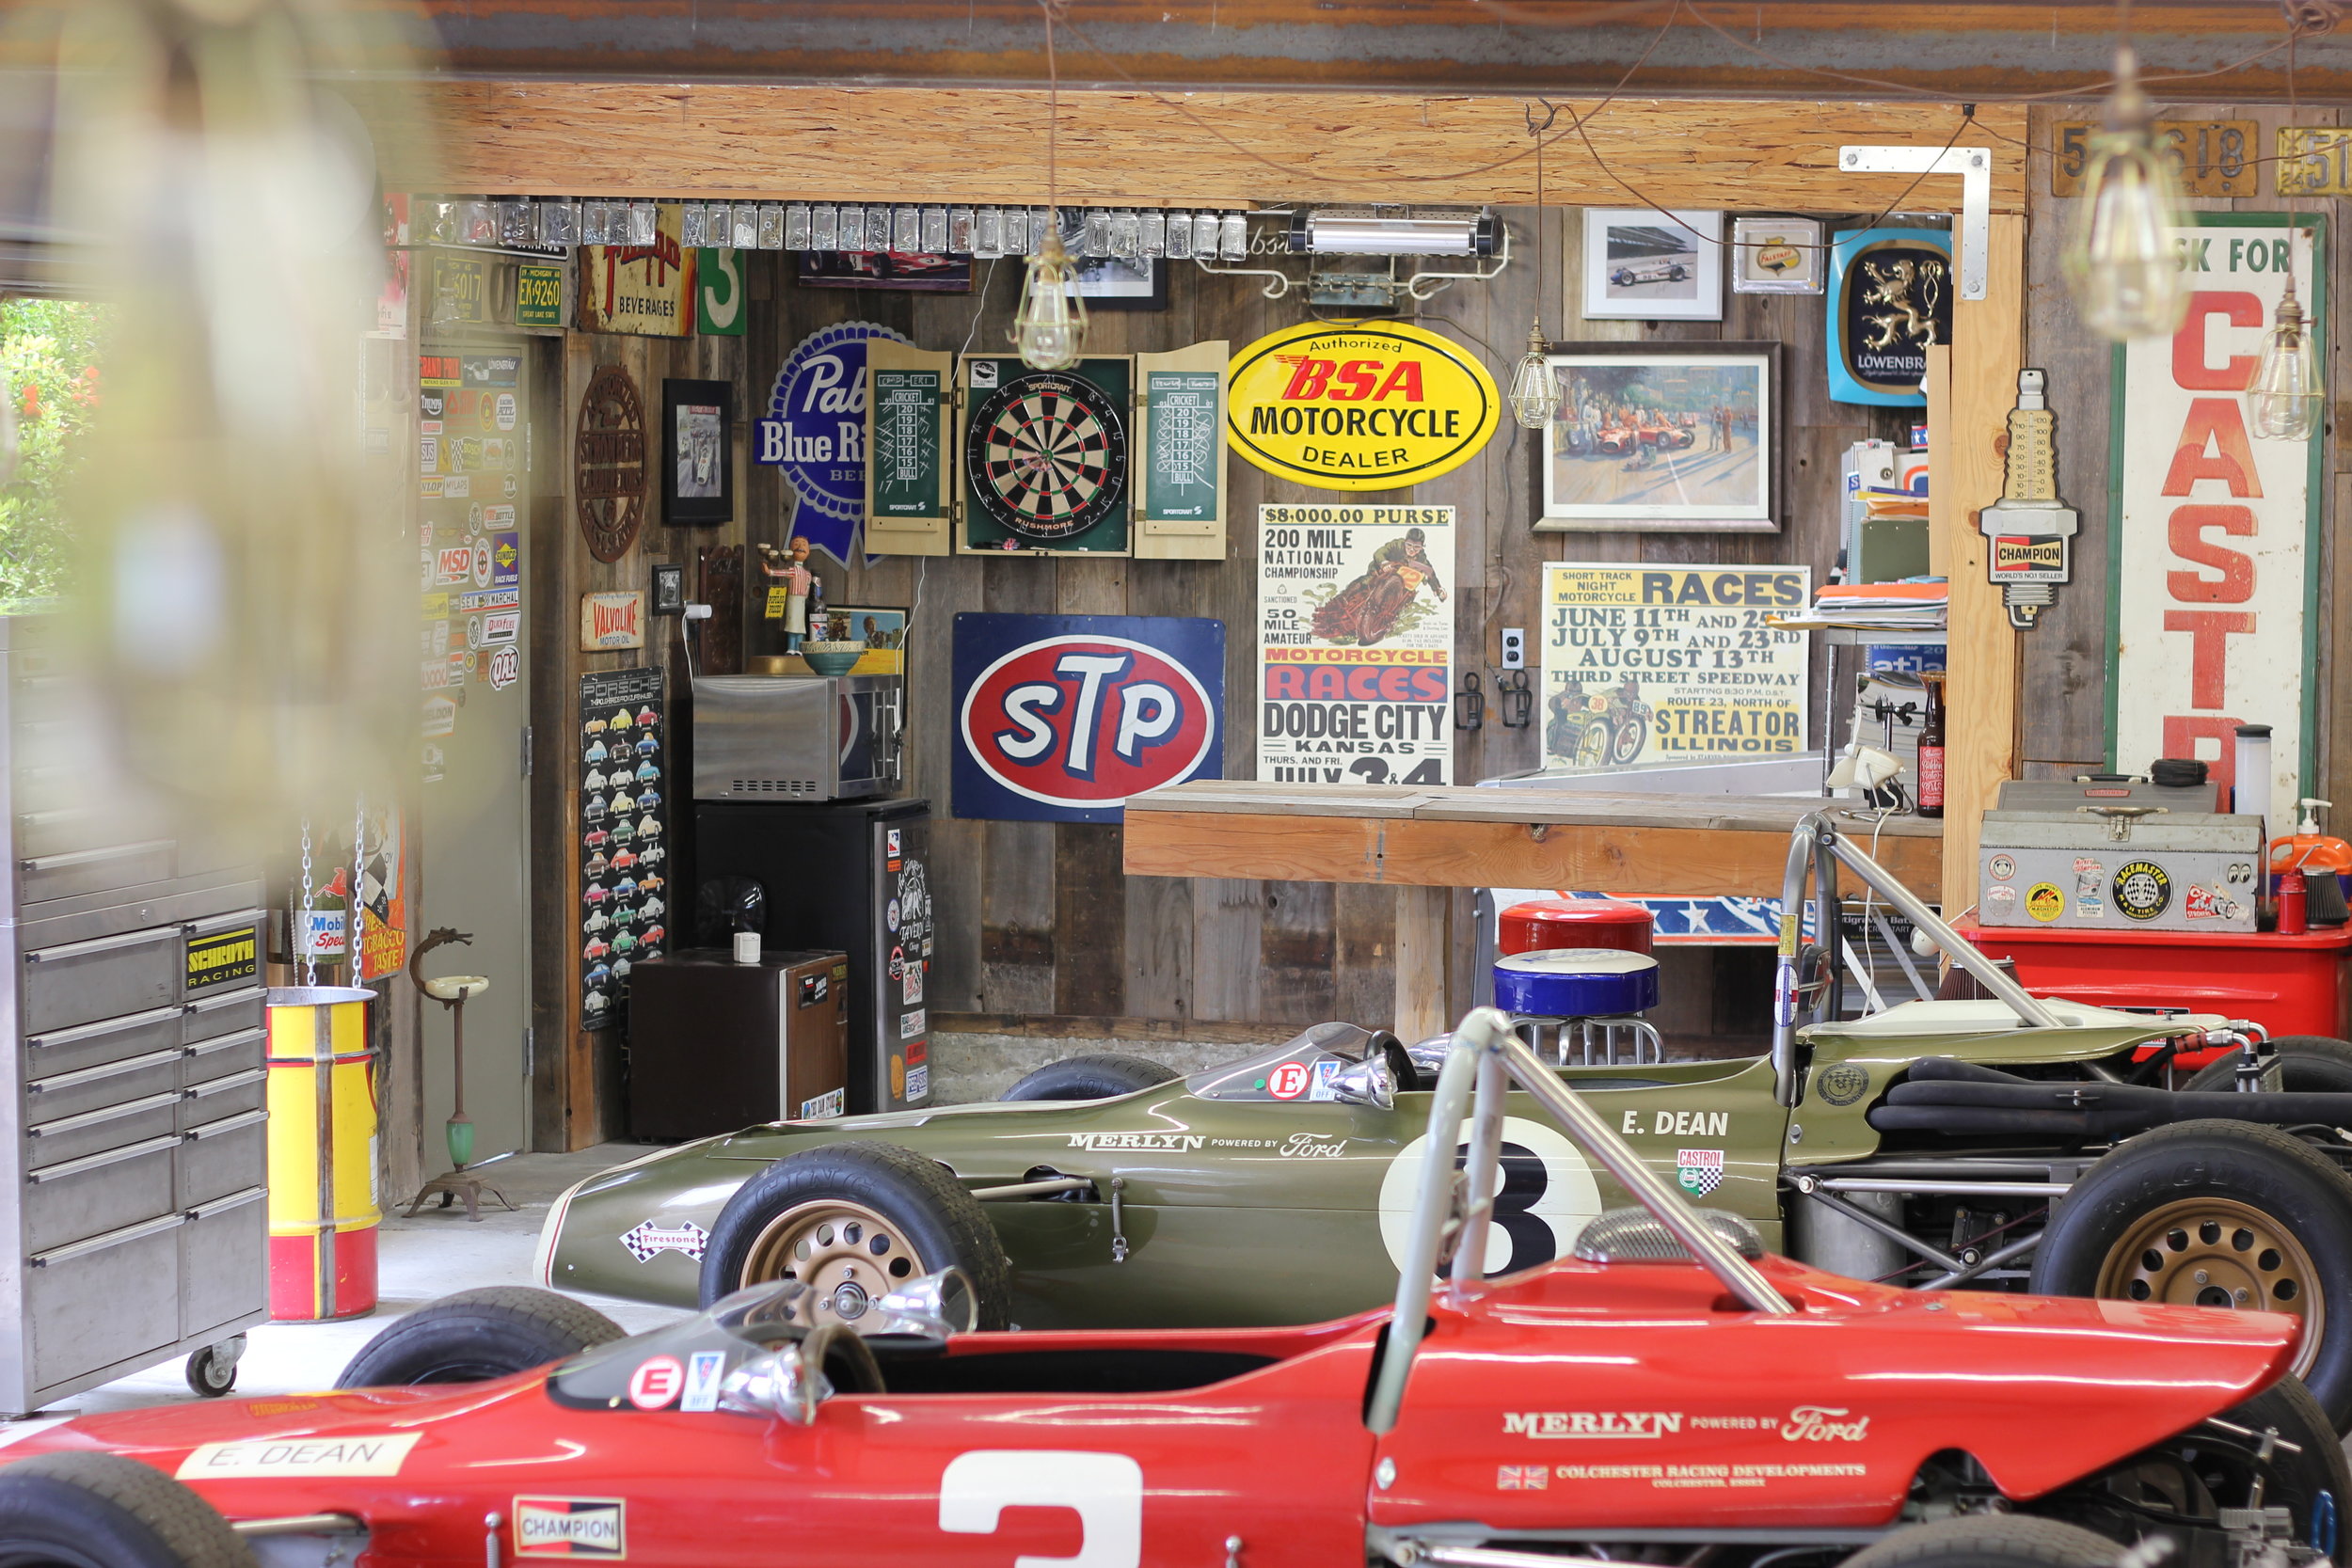 Dean Vintage Racing — ERIC DEAN DESIGN pic